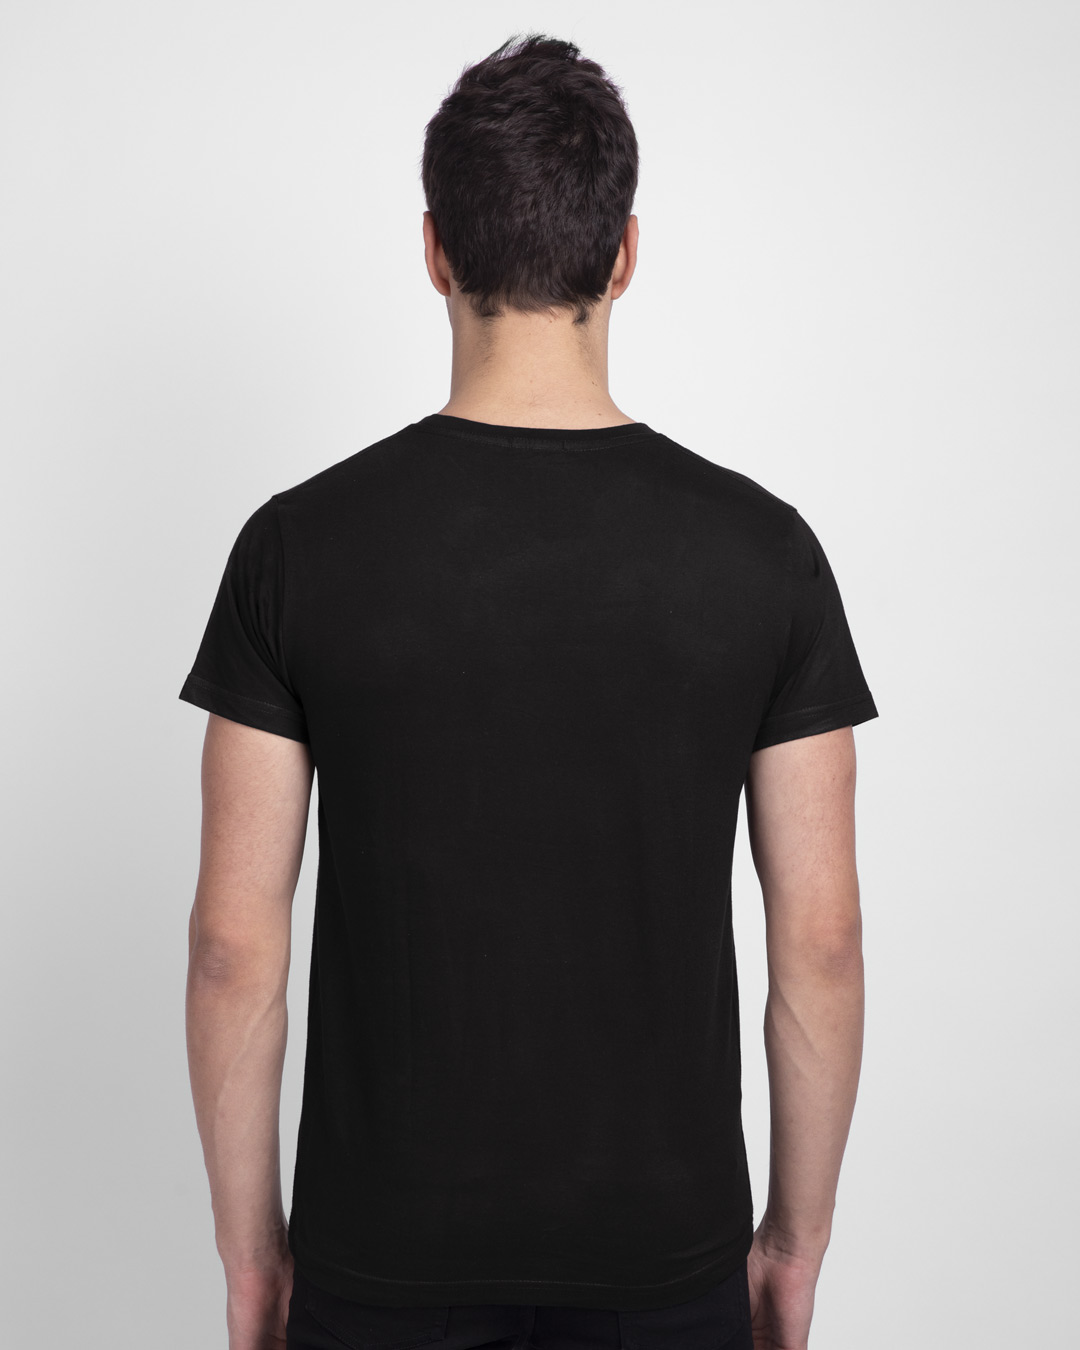 Shop An Imposter Half Sleeve T-Shirt Black-Back